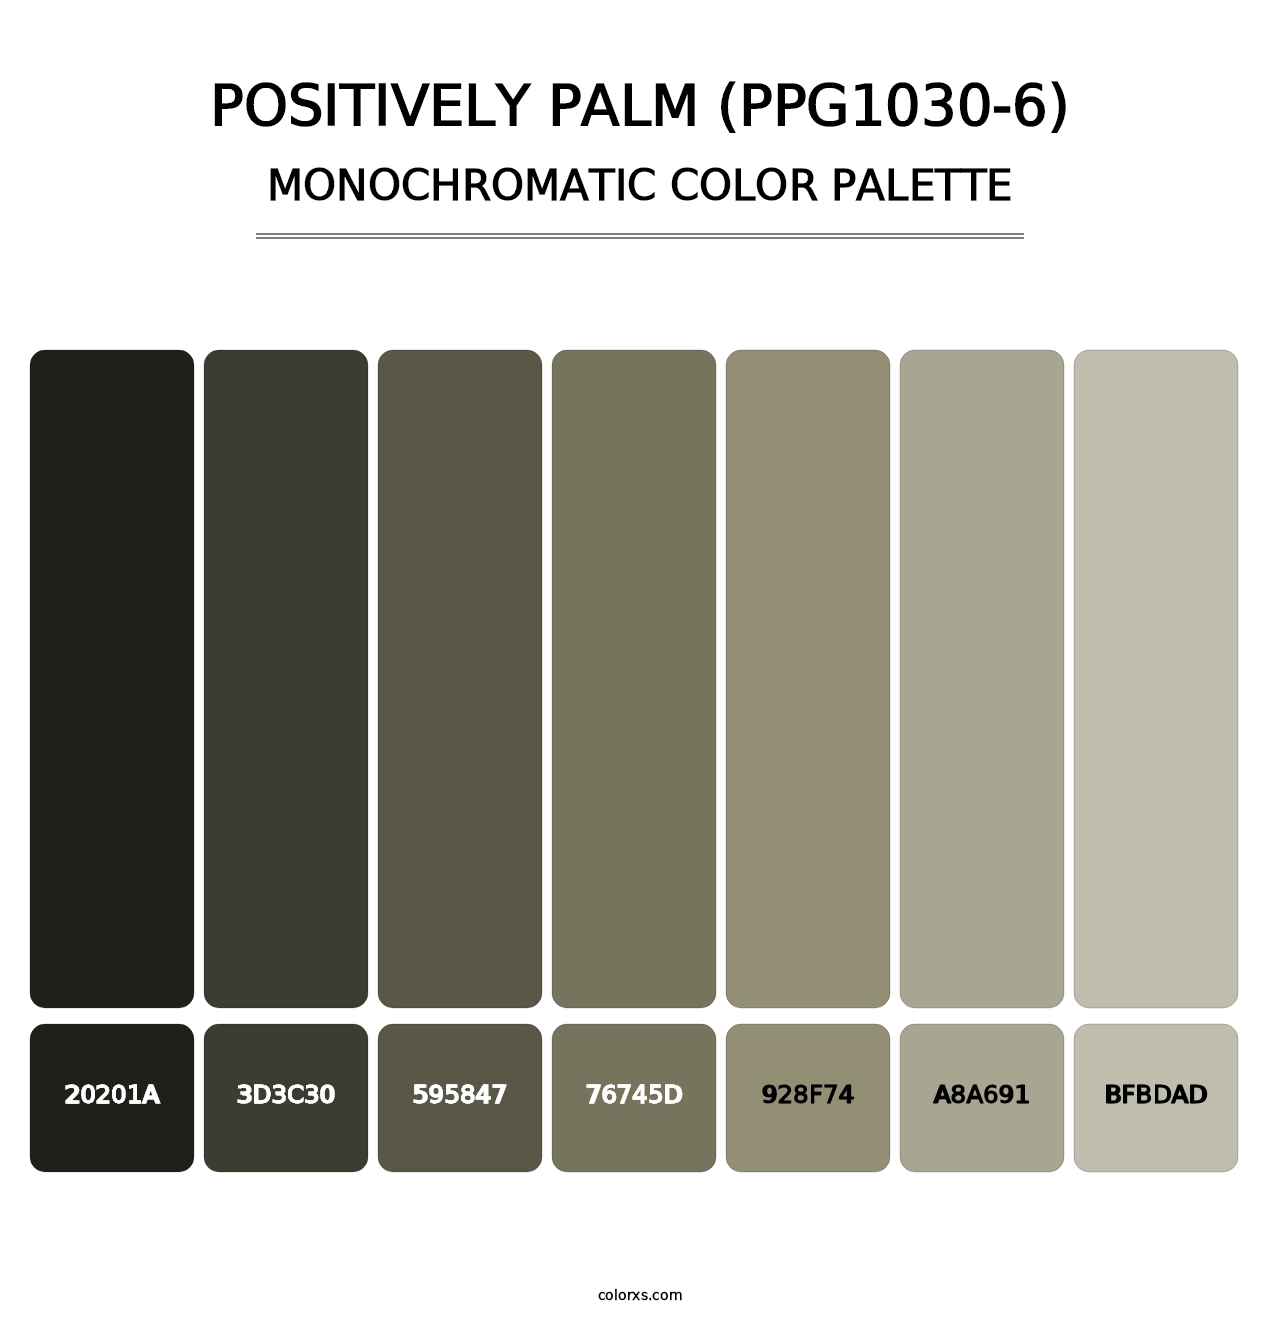 Positively Palm (PPG1030-6) - Monochromatic Color Palette